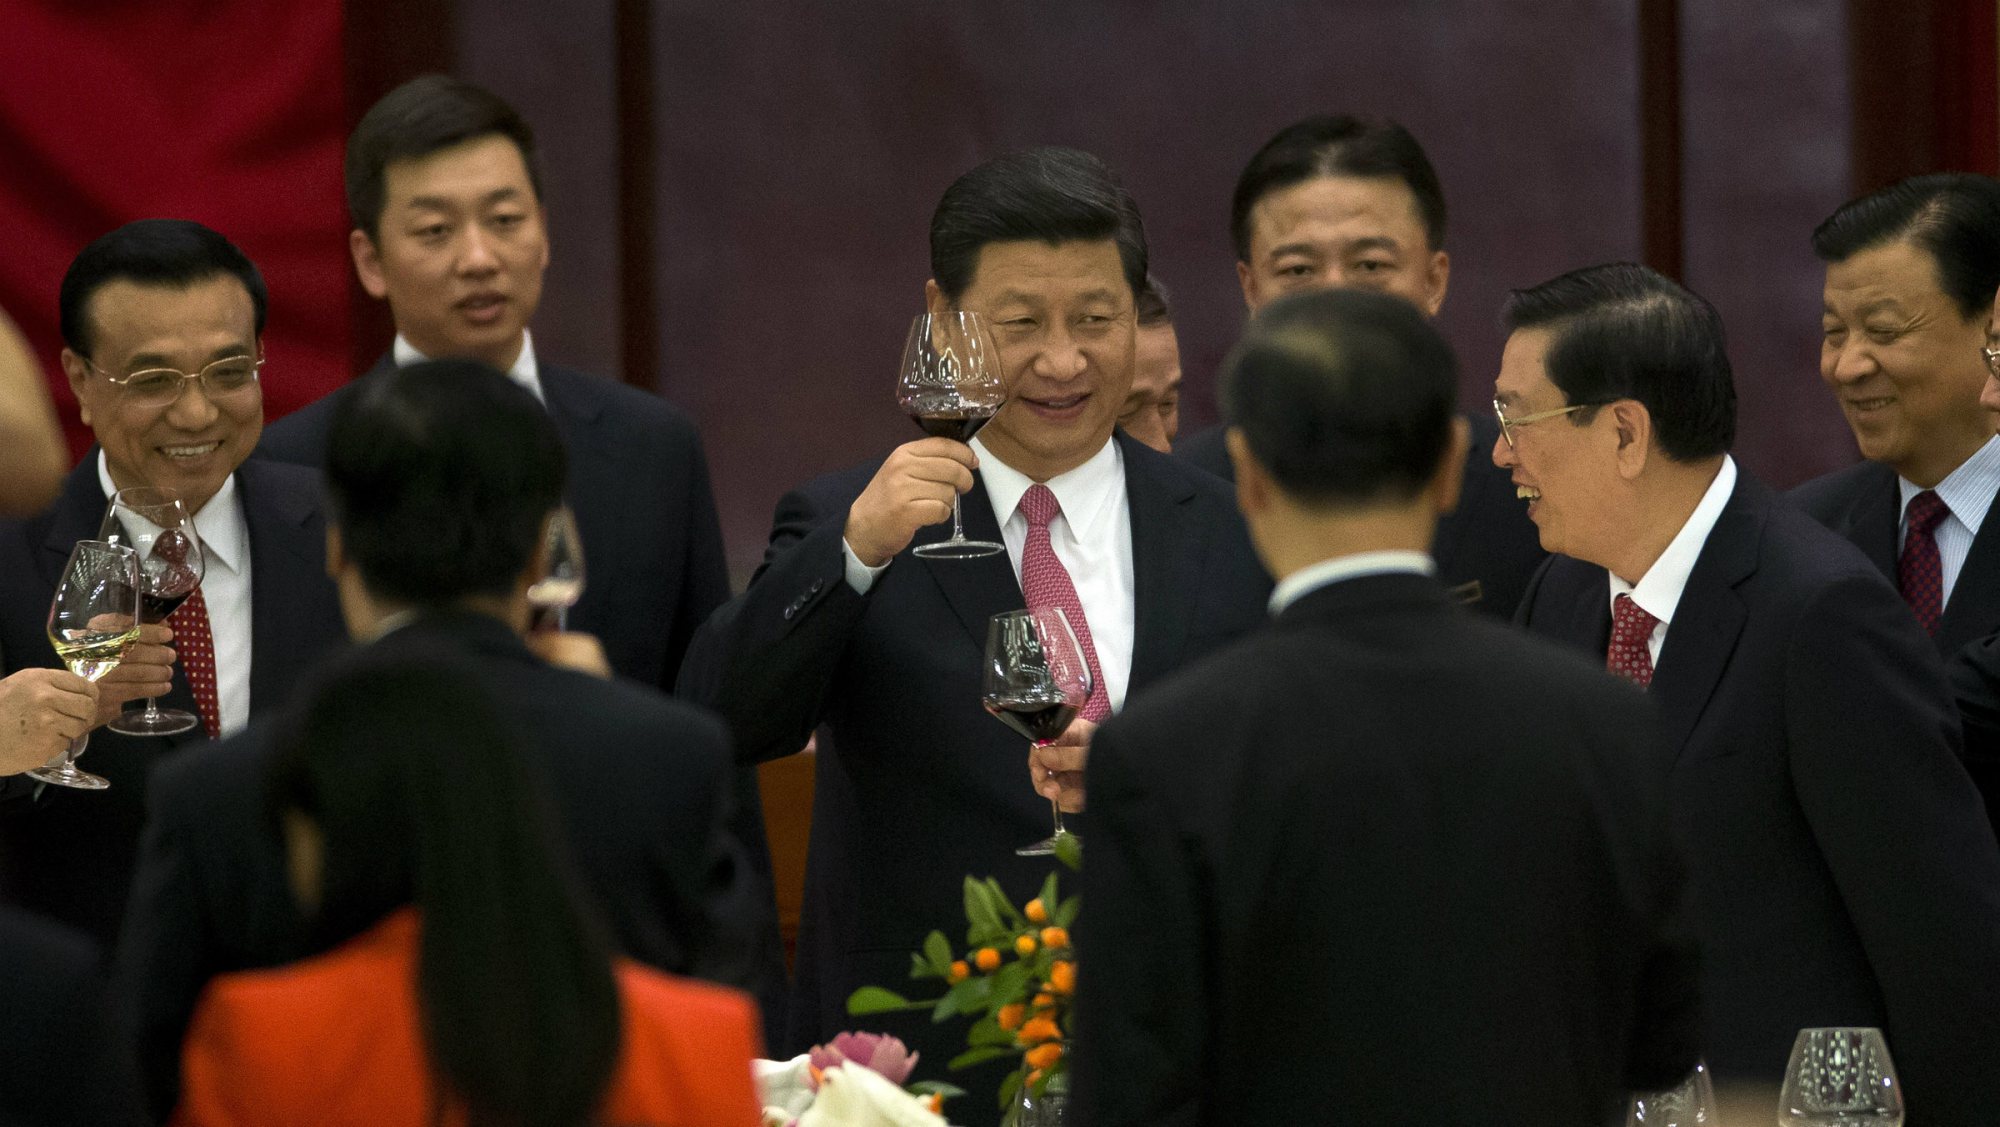 China is doing a “tremendous” job protecting human rights, says China